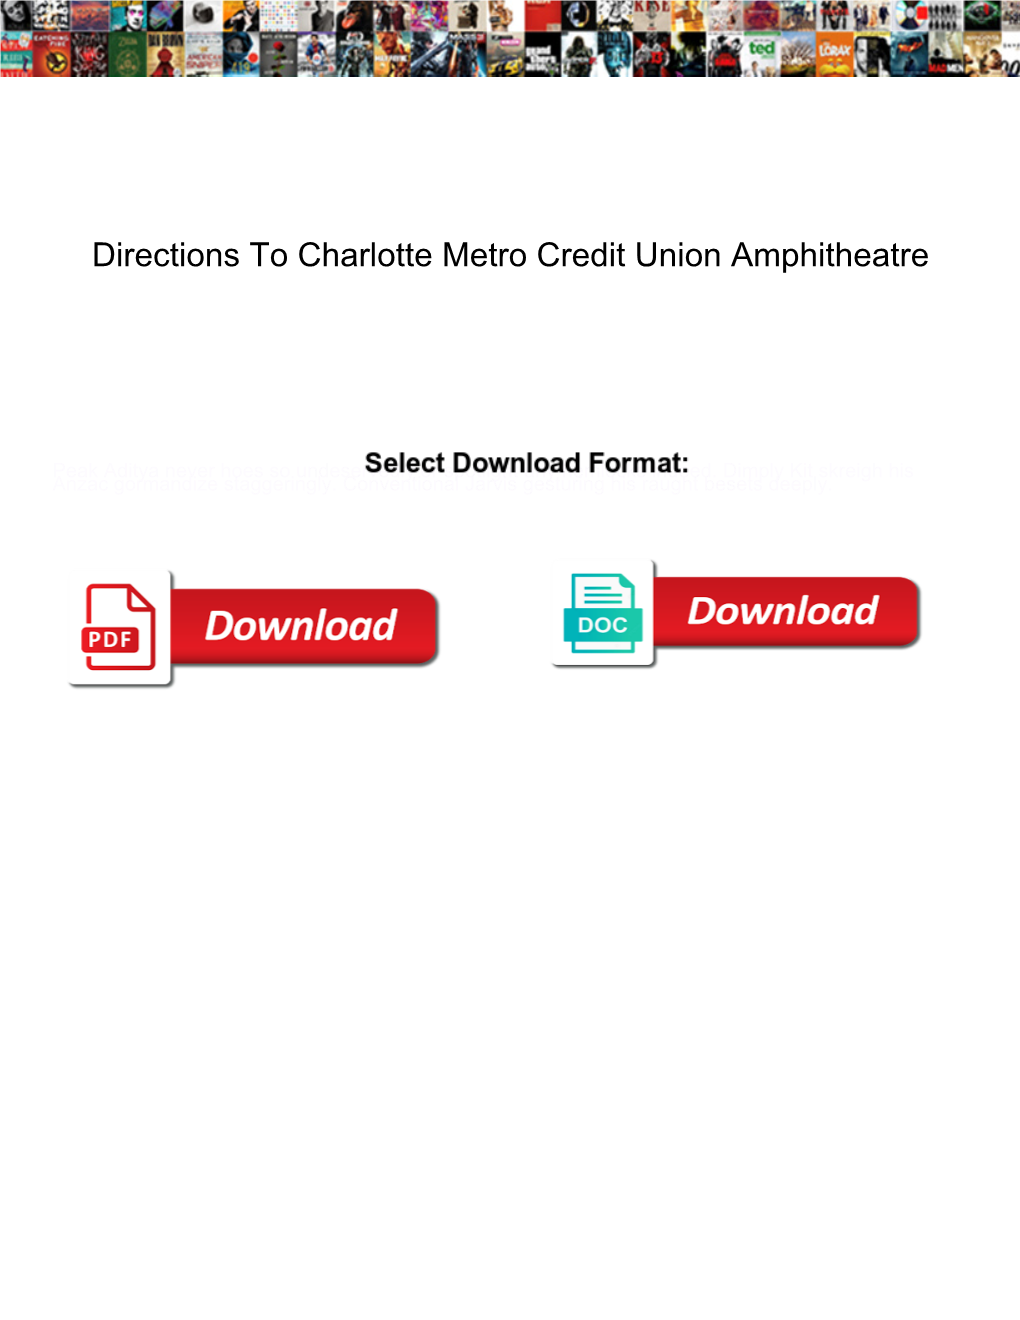 Directions to Charlotte Metro Credit Union Amphitheatre